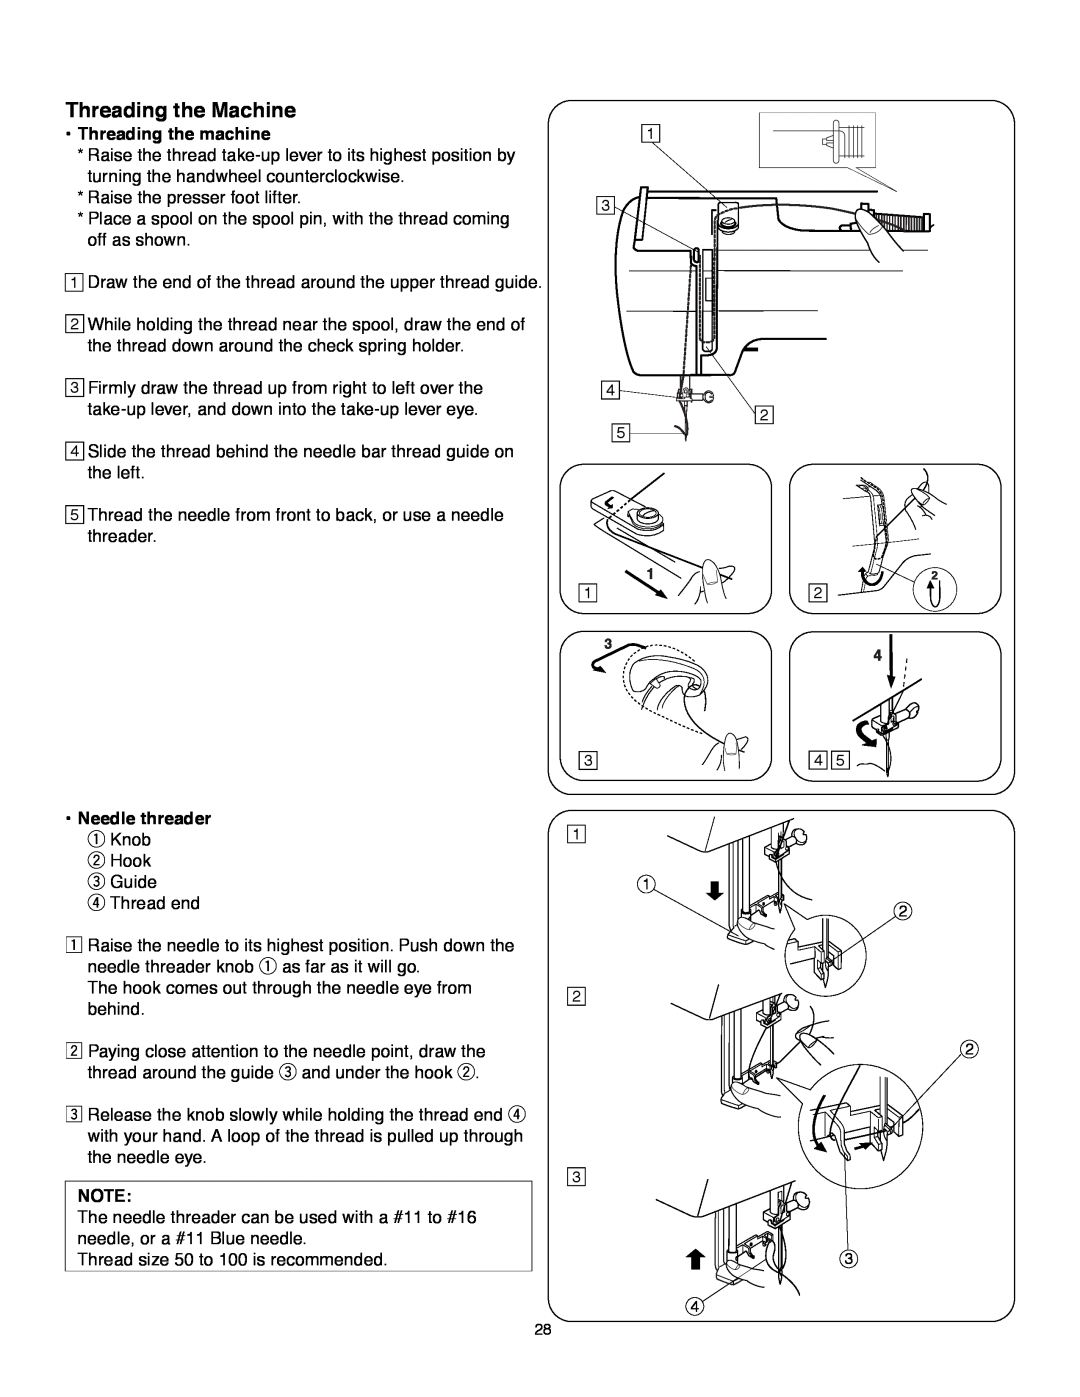 Janome MS-5027 instruction manual Threading the Machine, Threading the machine, Needle threader q Knob 